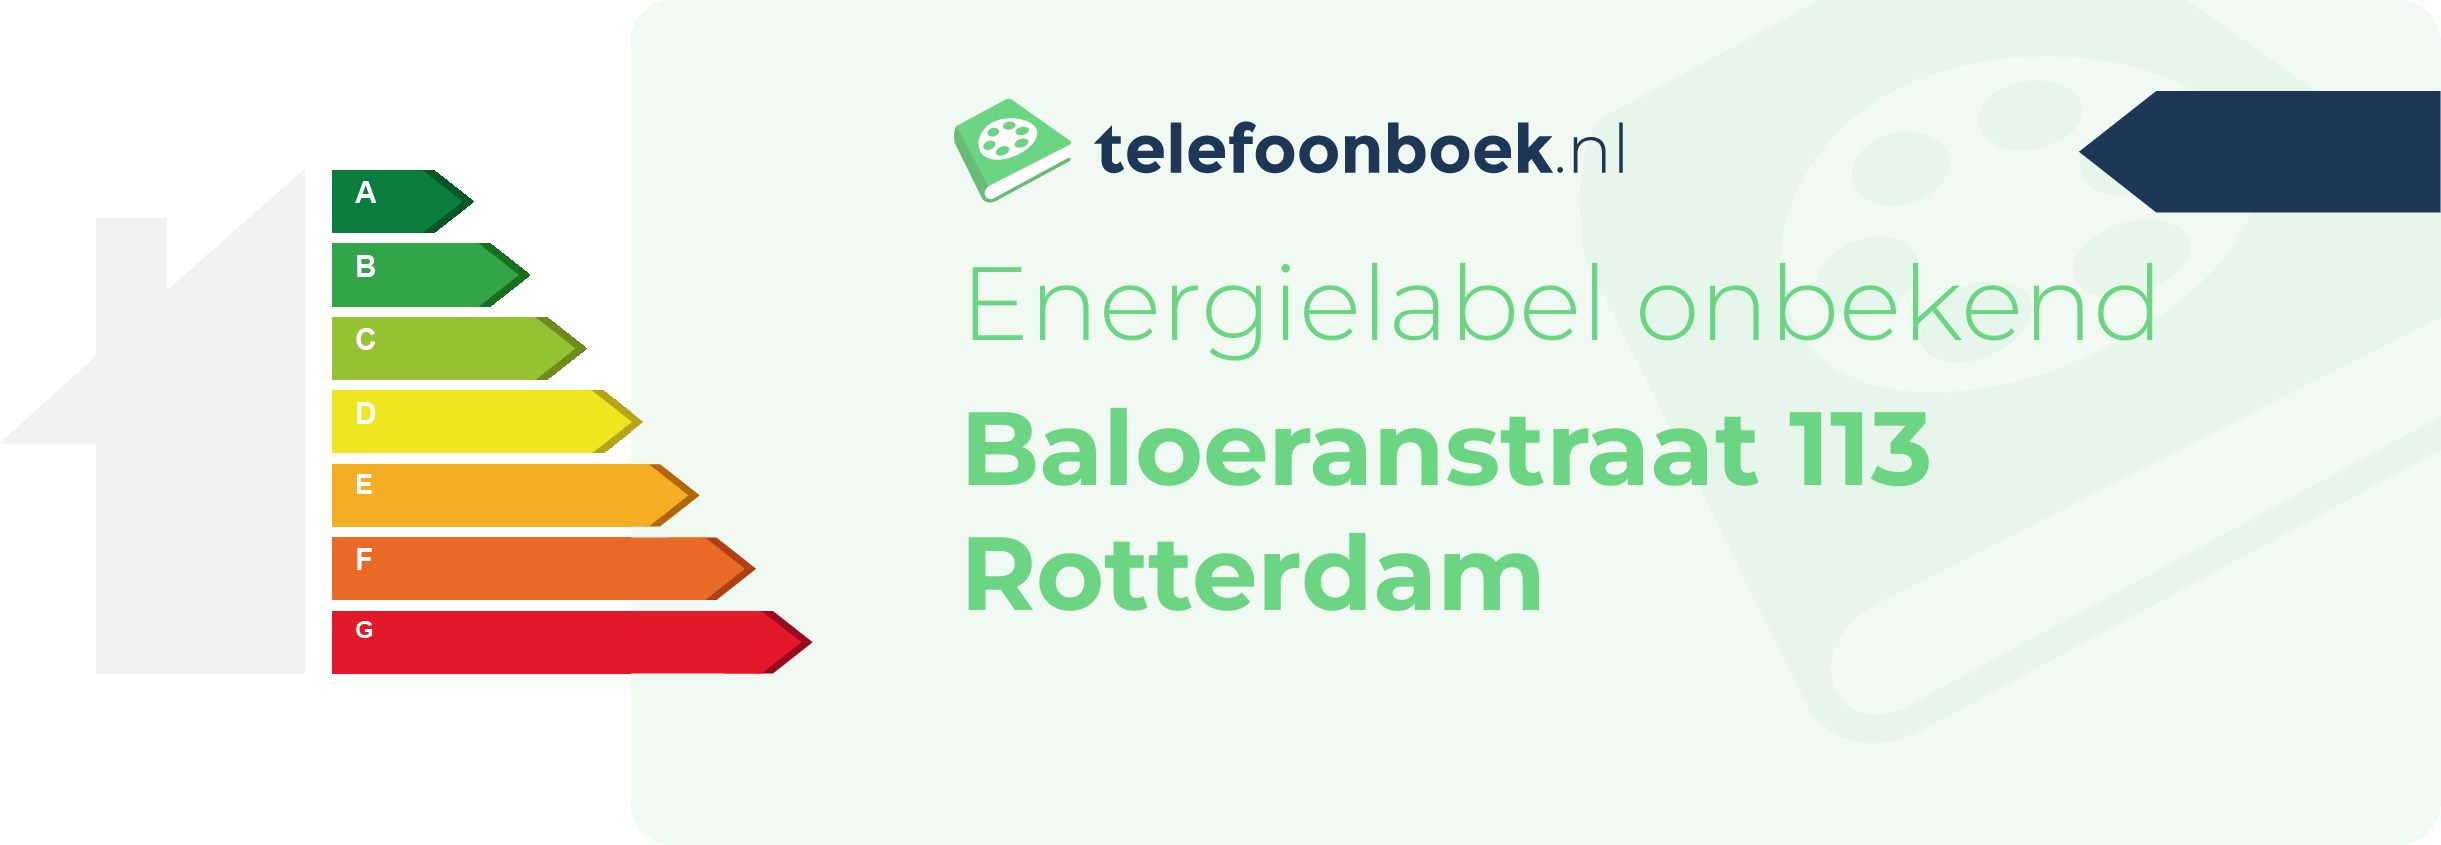 Energielabel Baloeranstraat 113 Rotterdam